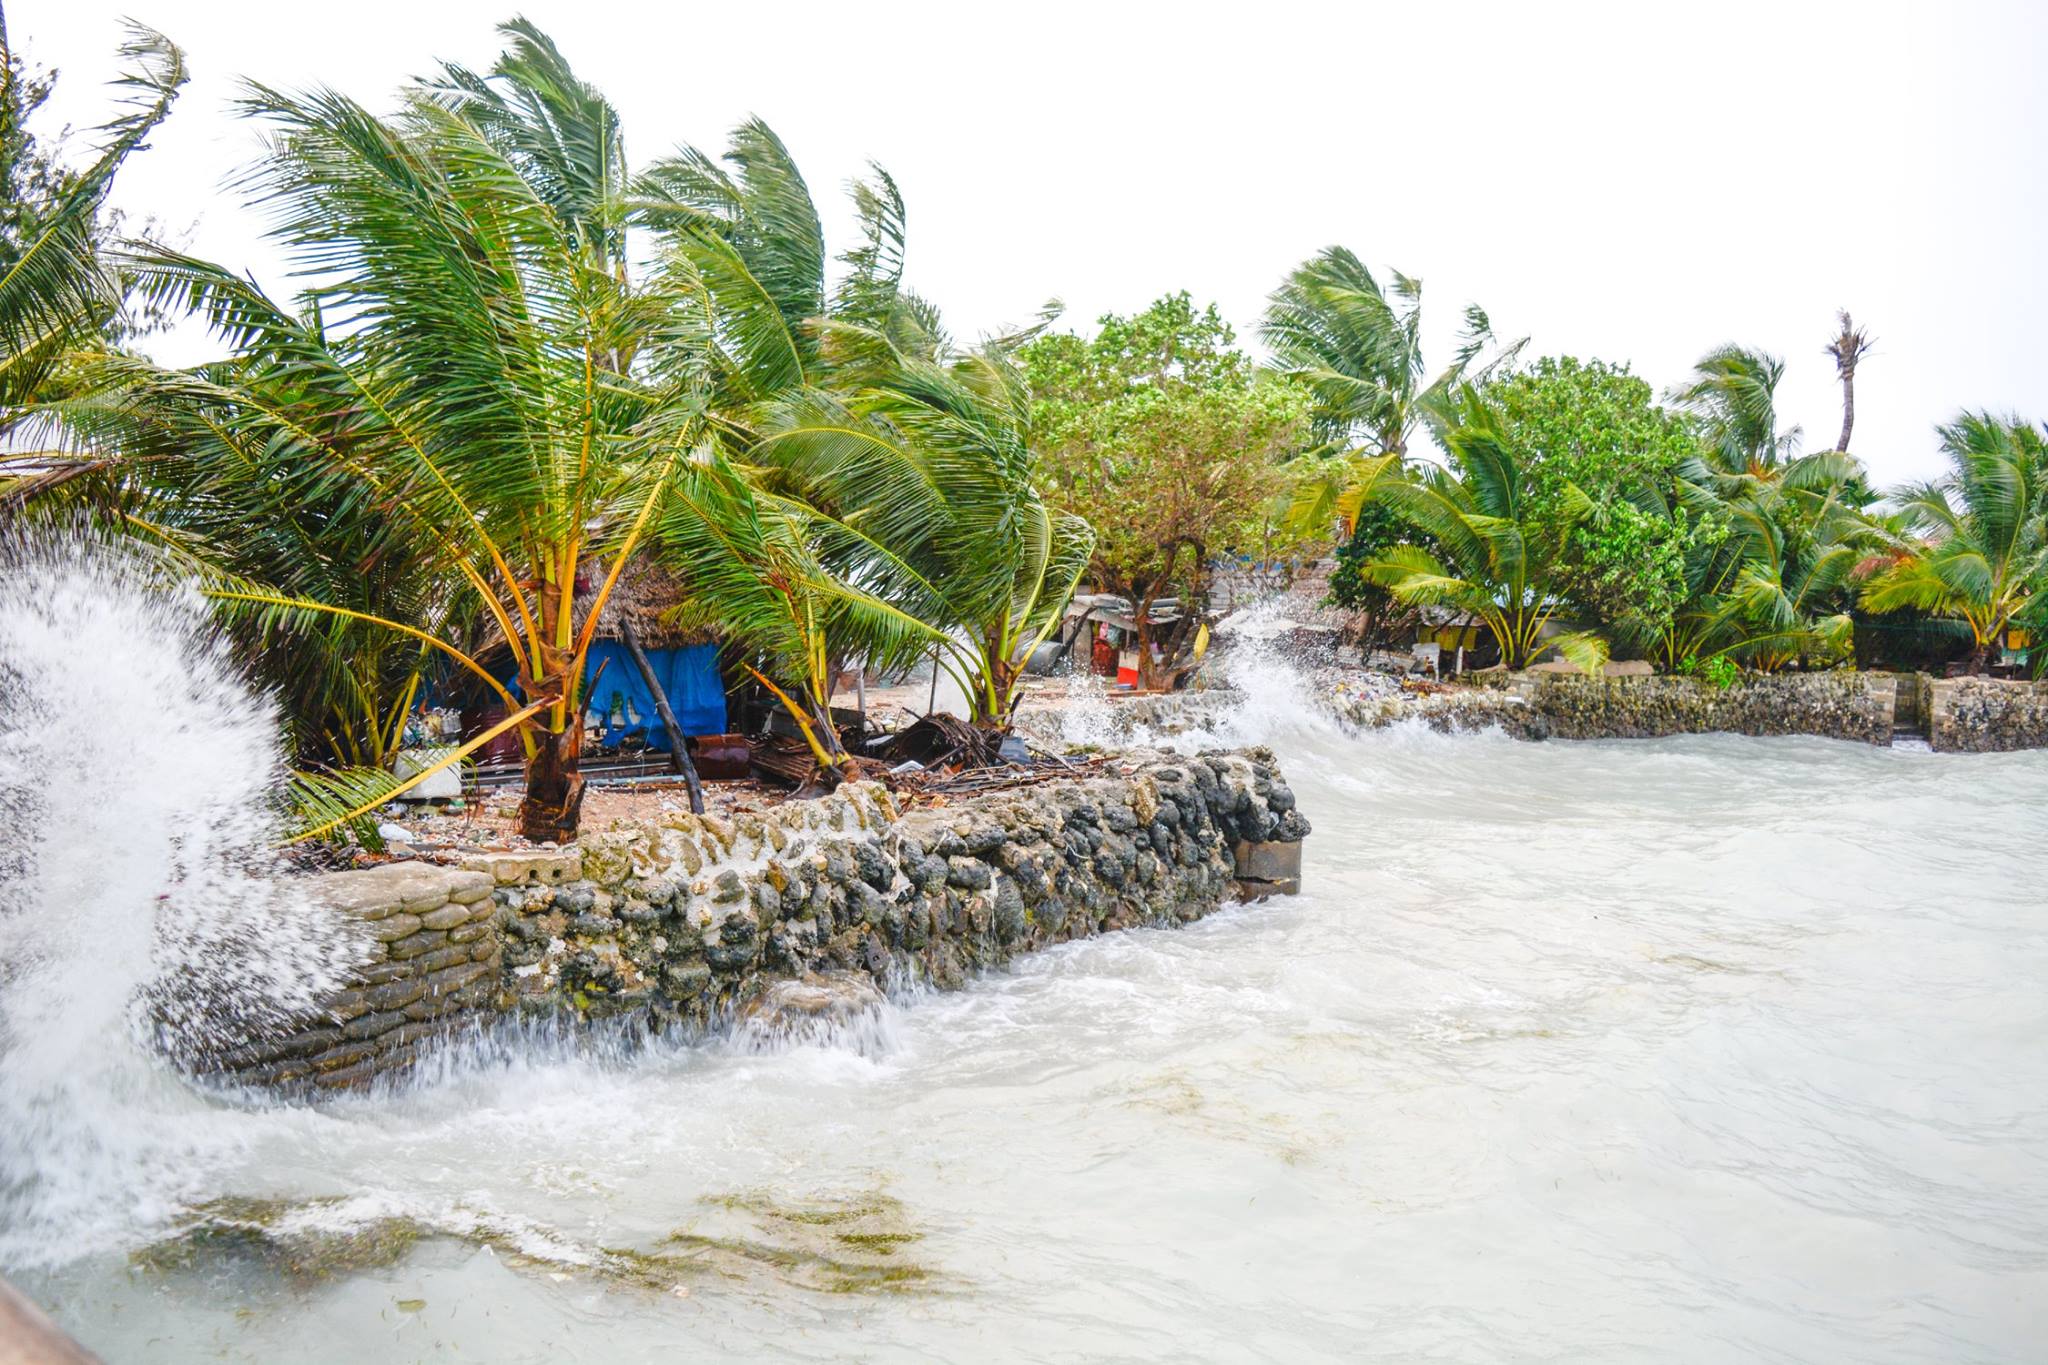 Super storms sweep through the area more regularly. Photo courtesy of Raimon Kataotao/Humans of Kiribati